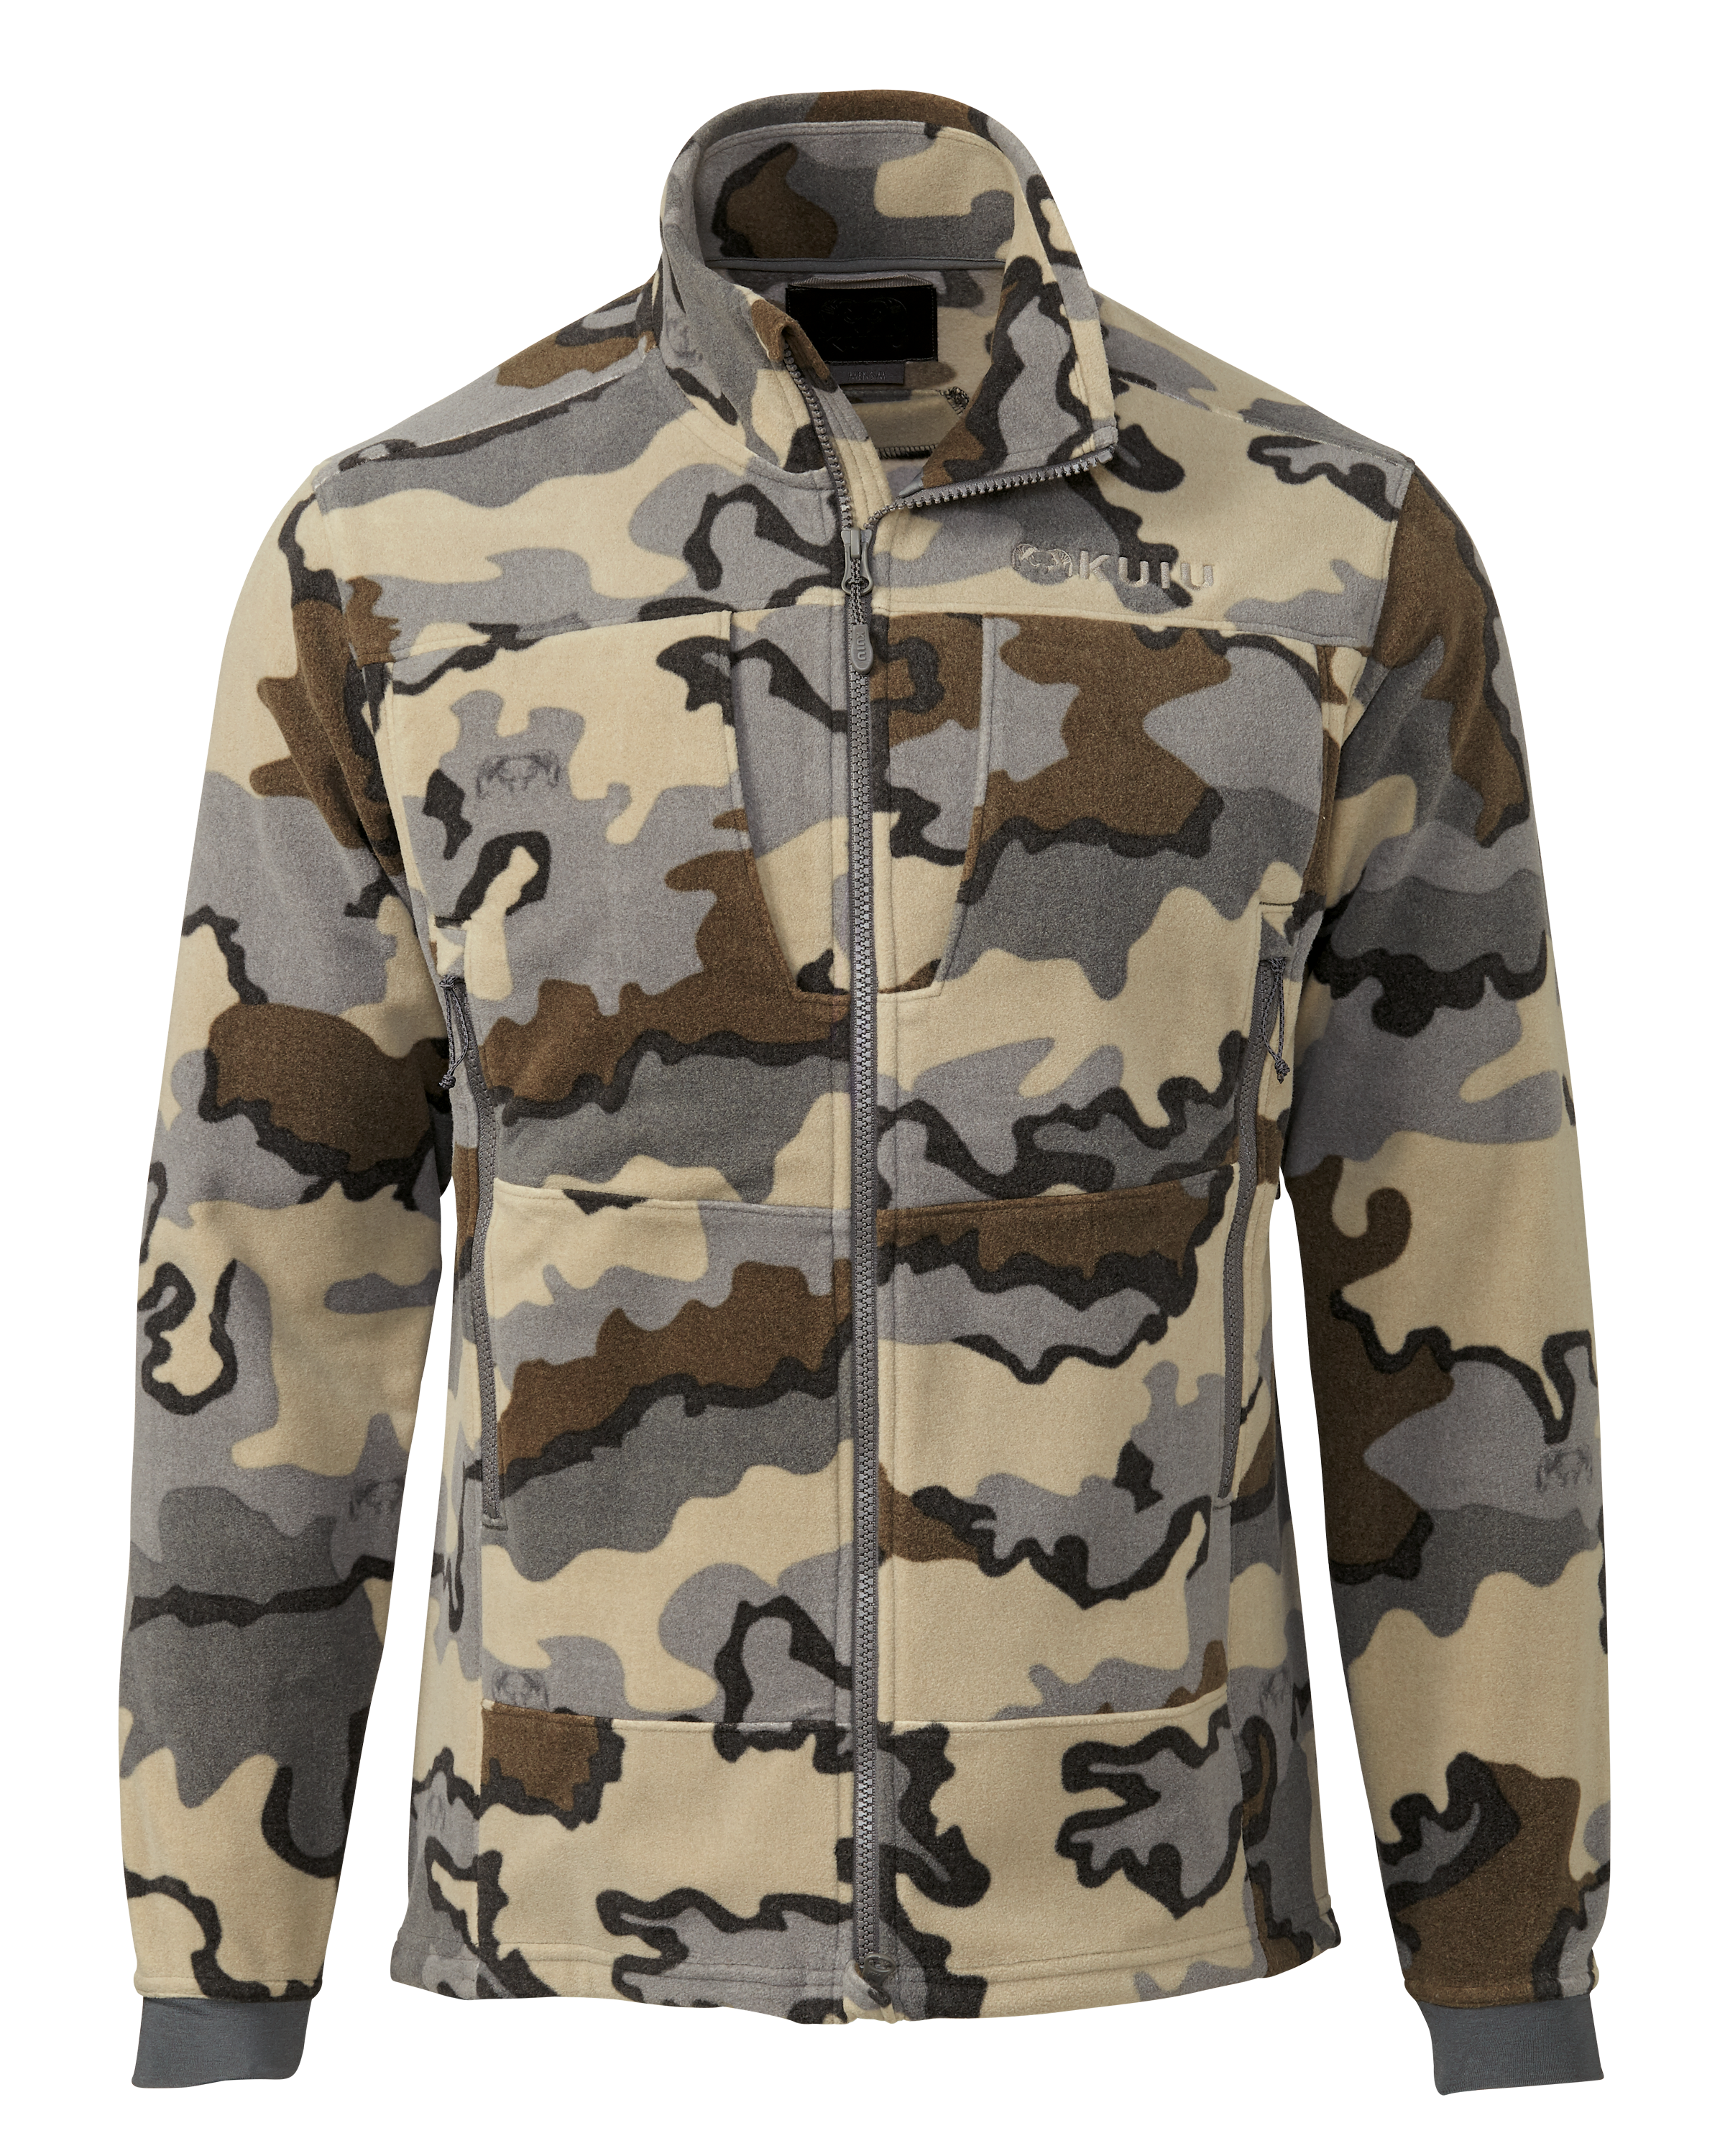 KUIU Wind Pro Fleece Full Zip Hunting Jacket in Vias | Large